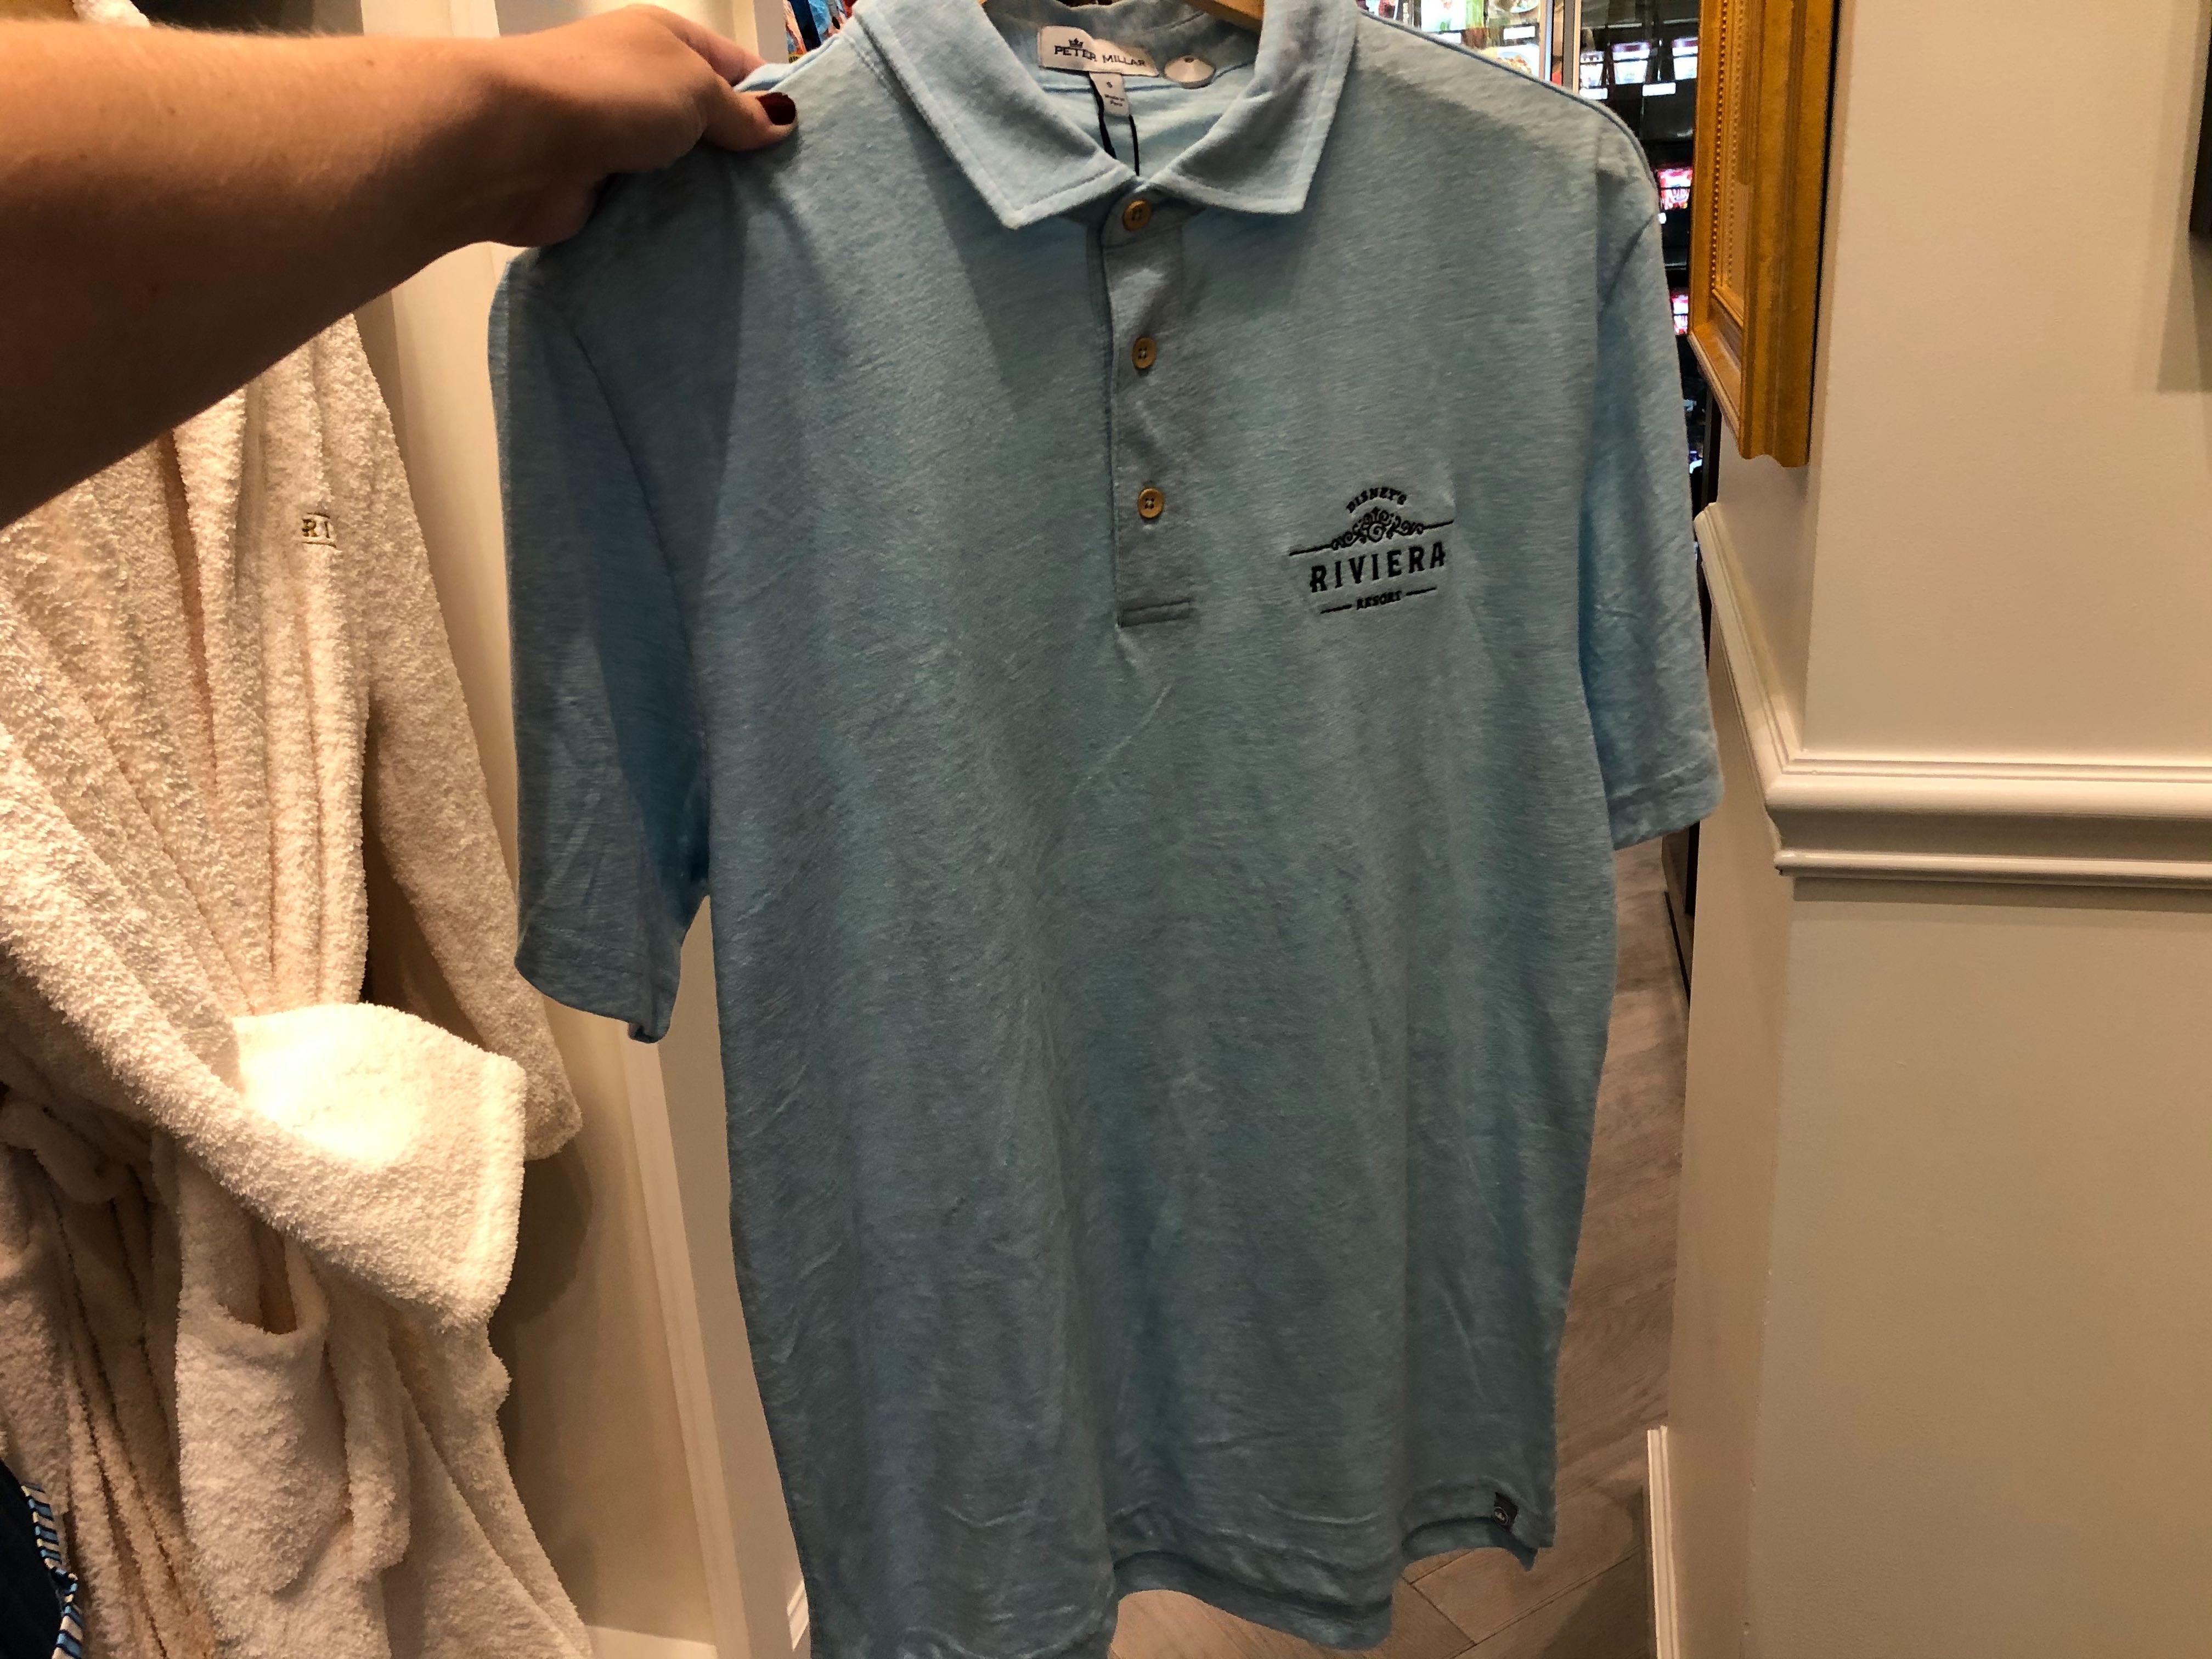 Riviera Resort Polo Shirt - $89.99